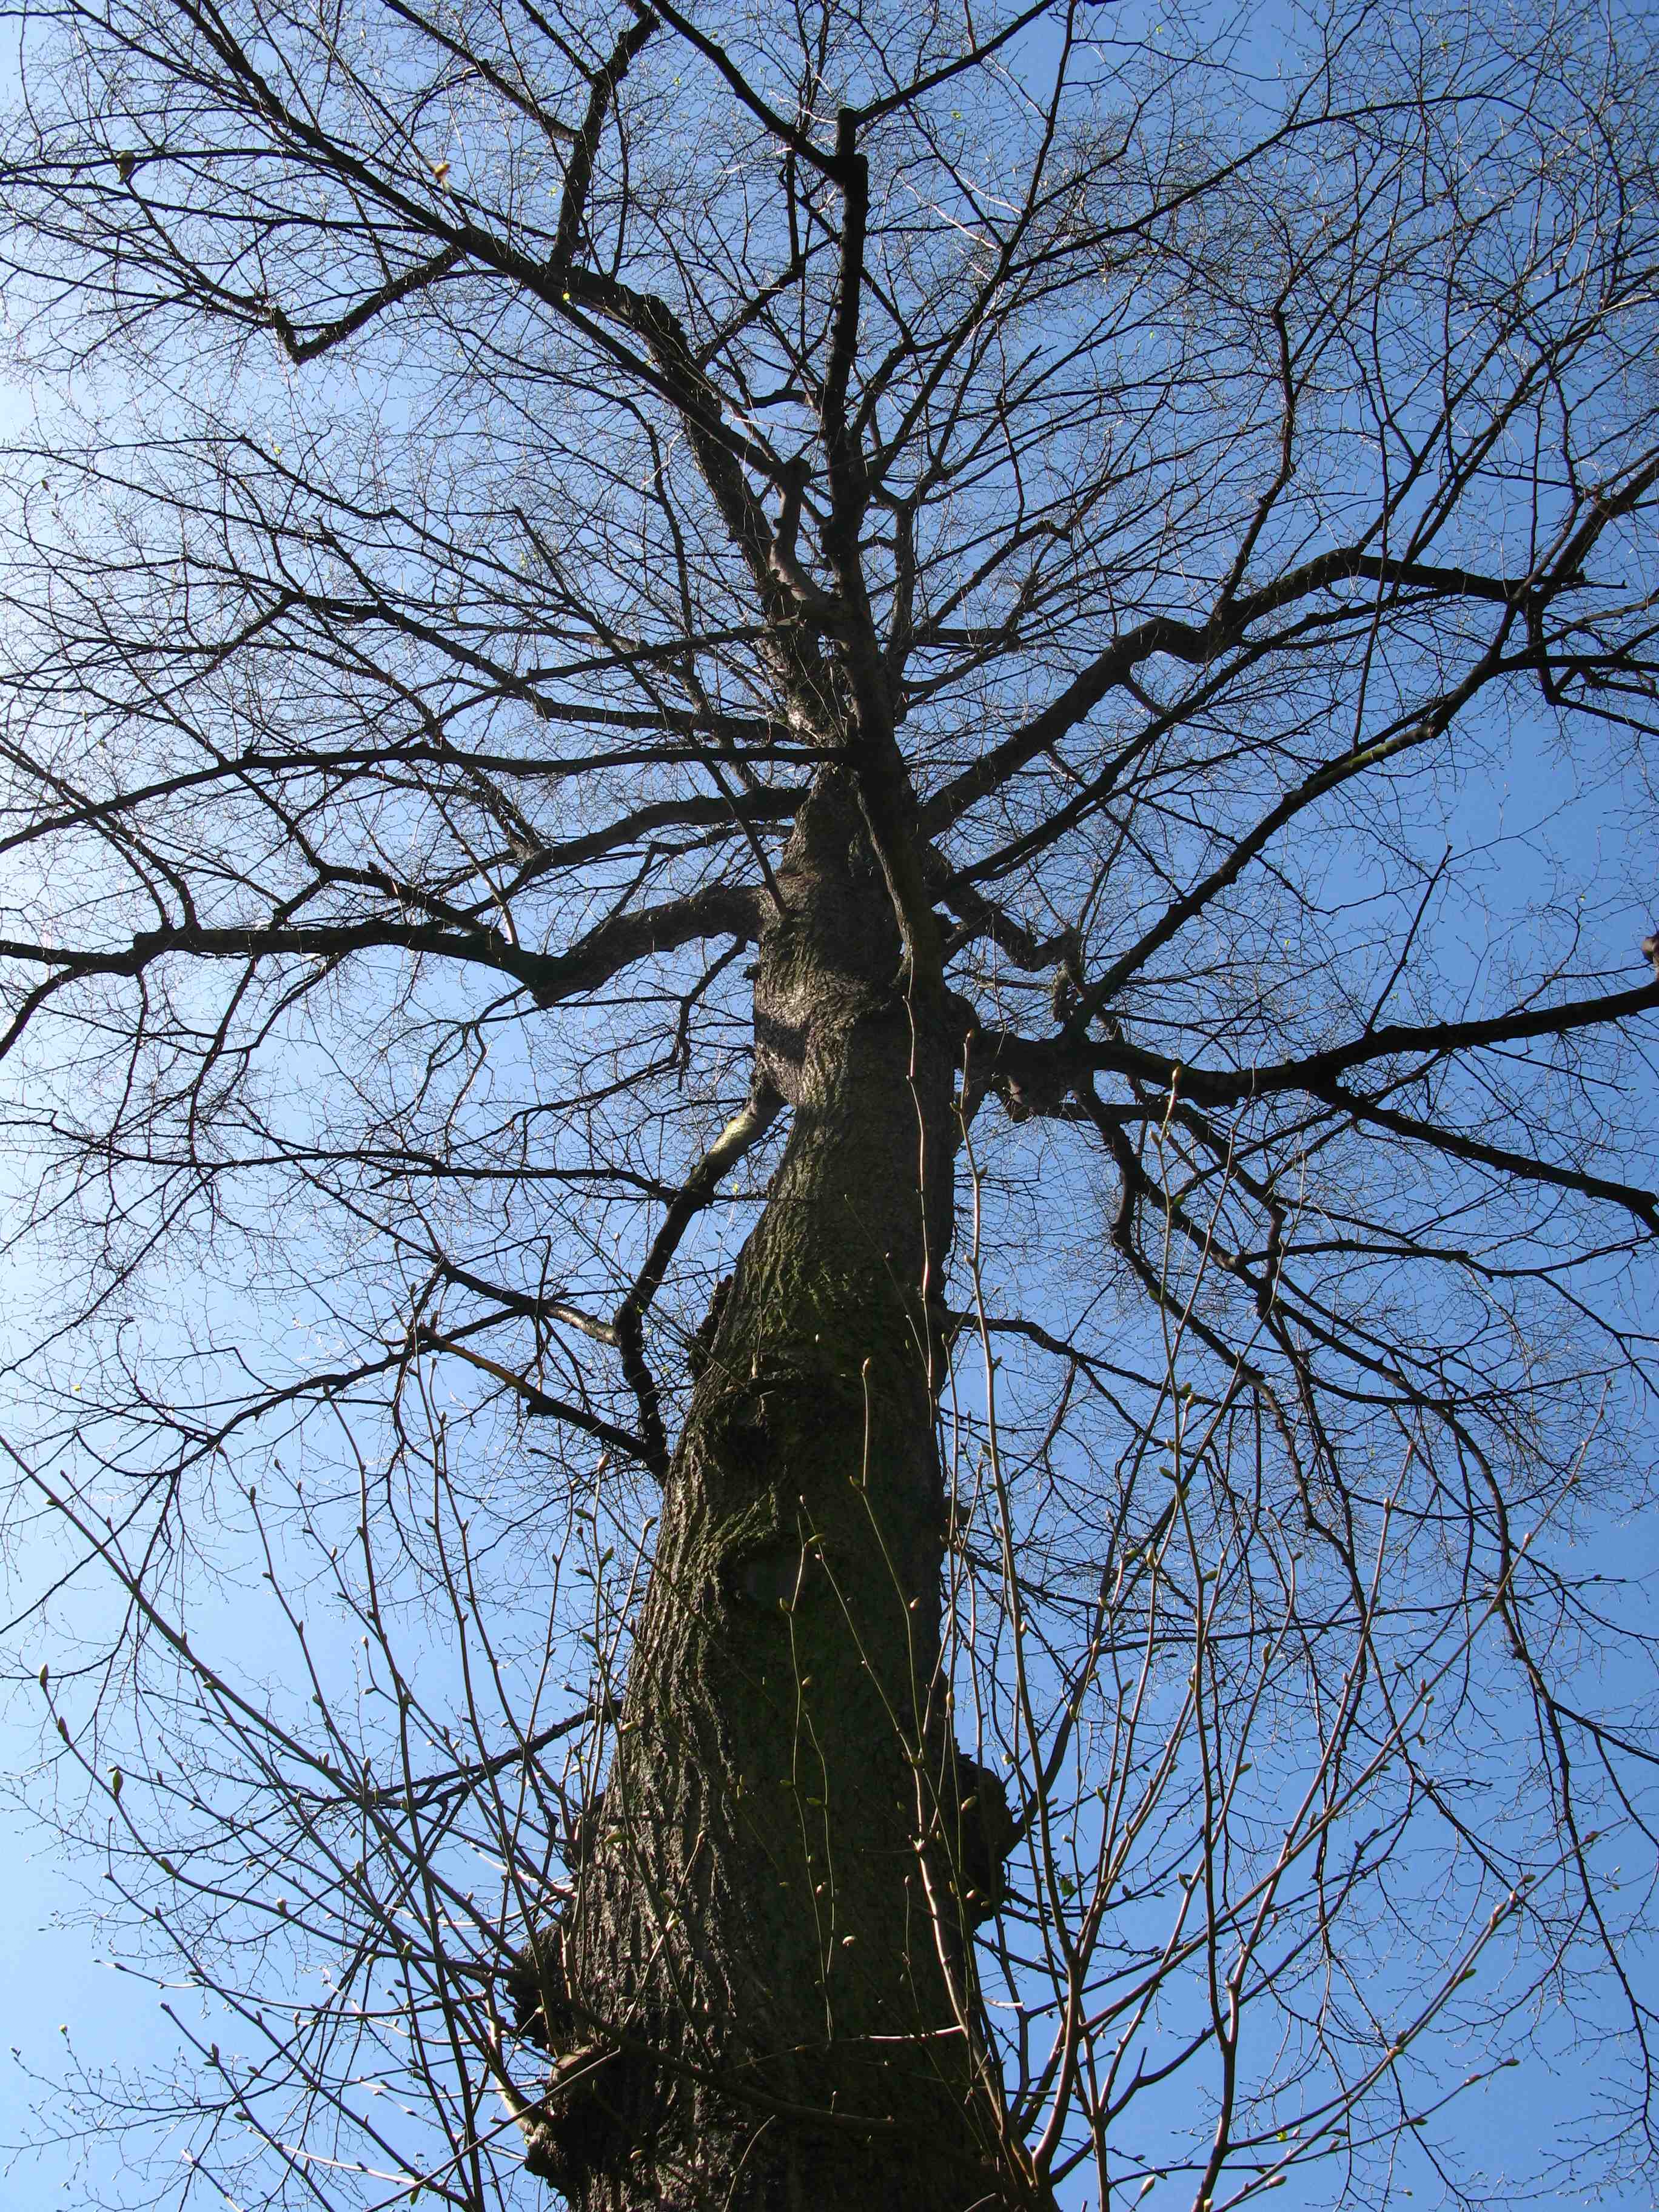 8. Canadian Assn Tree